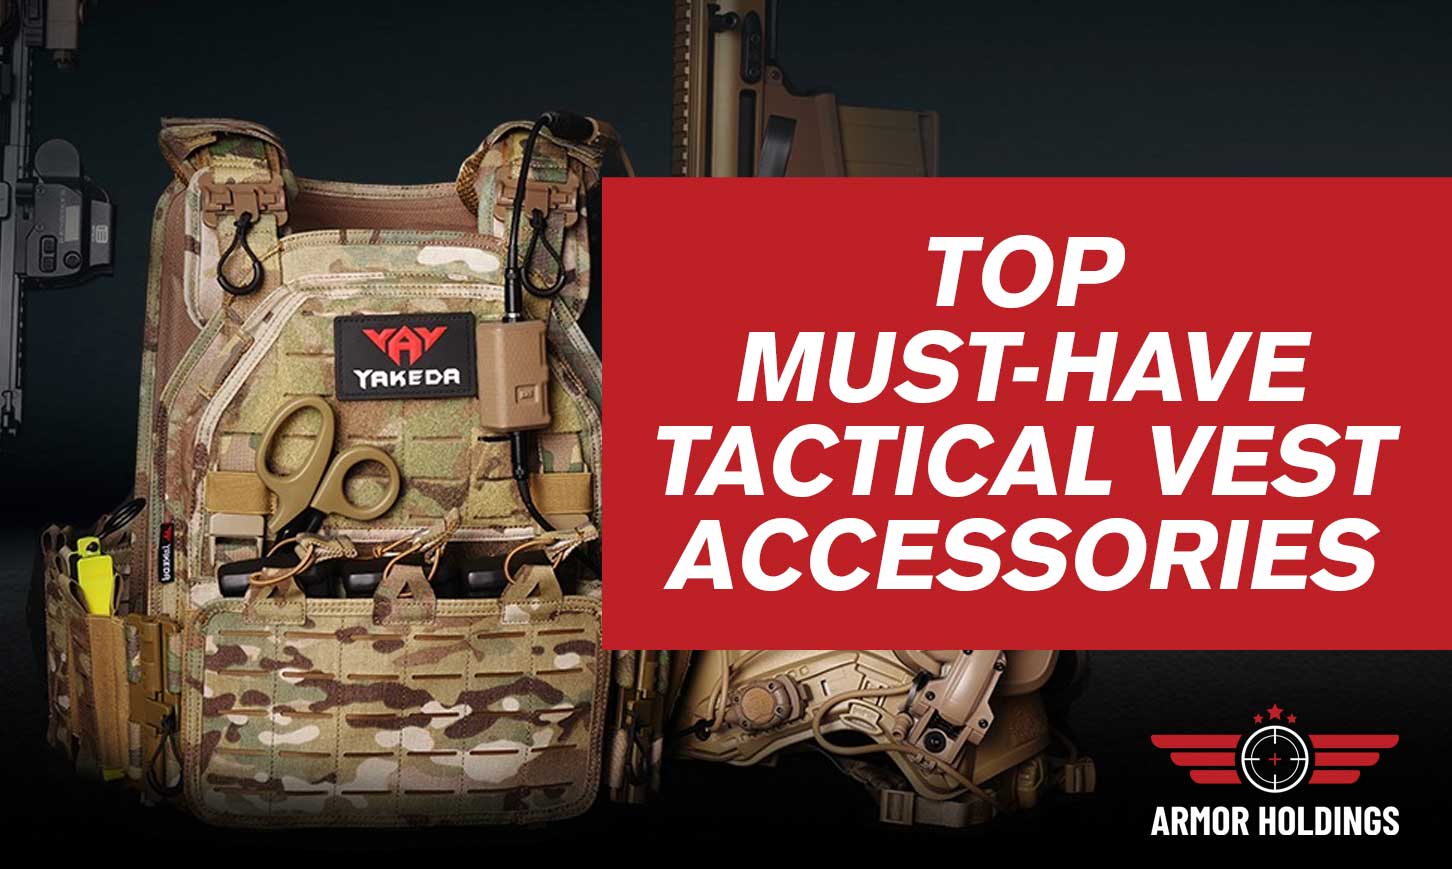 Top must have tactical vest accessories